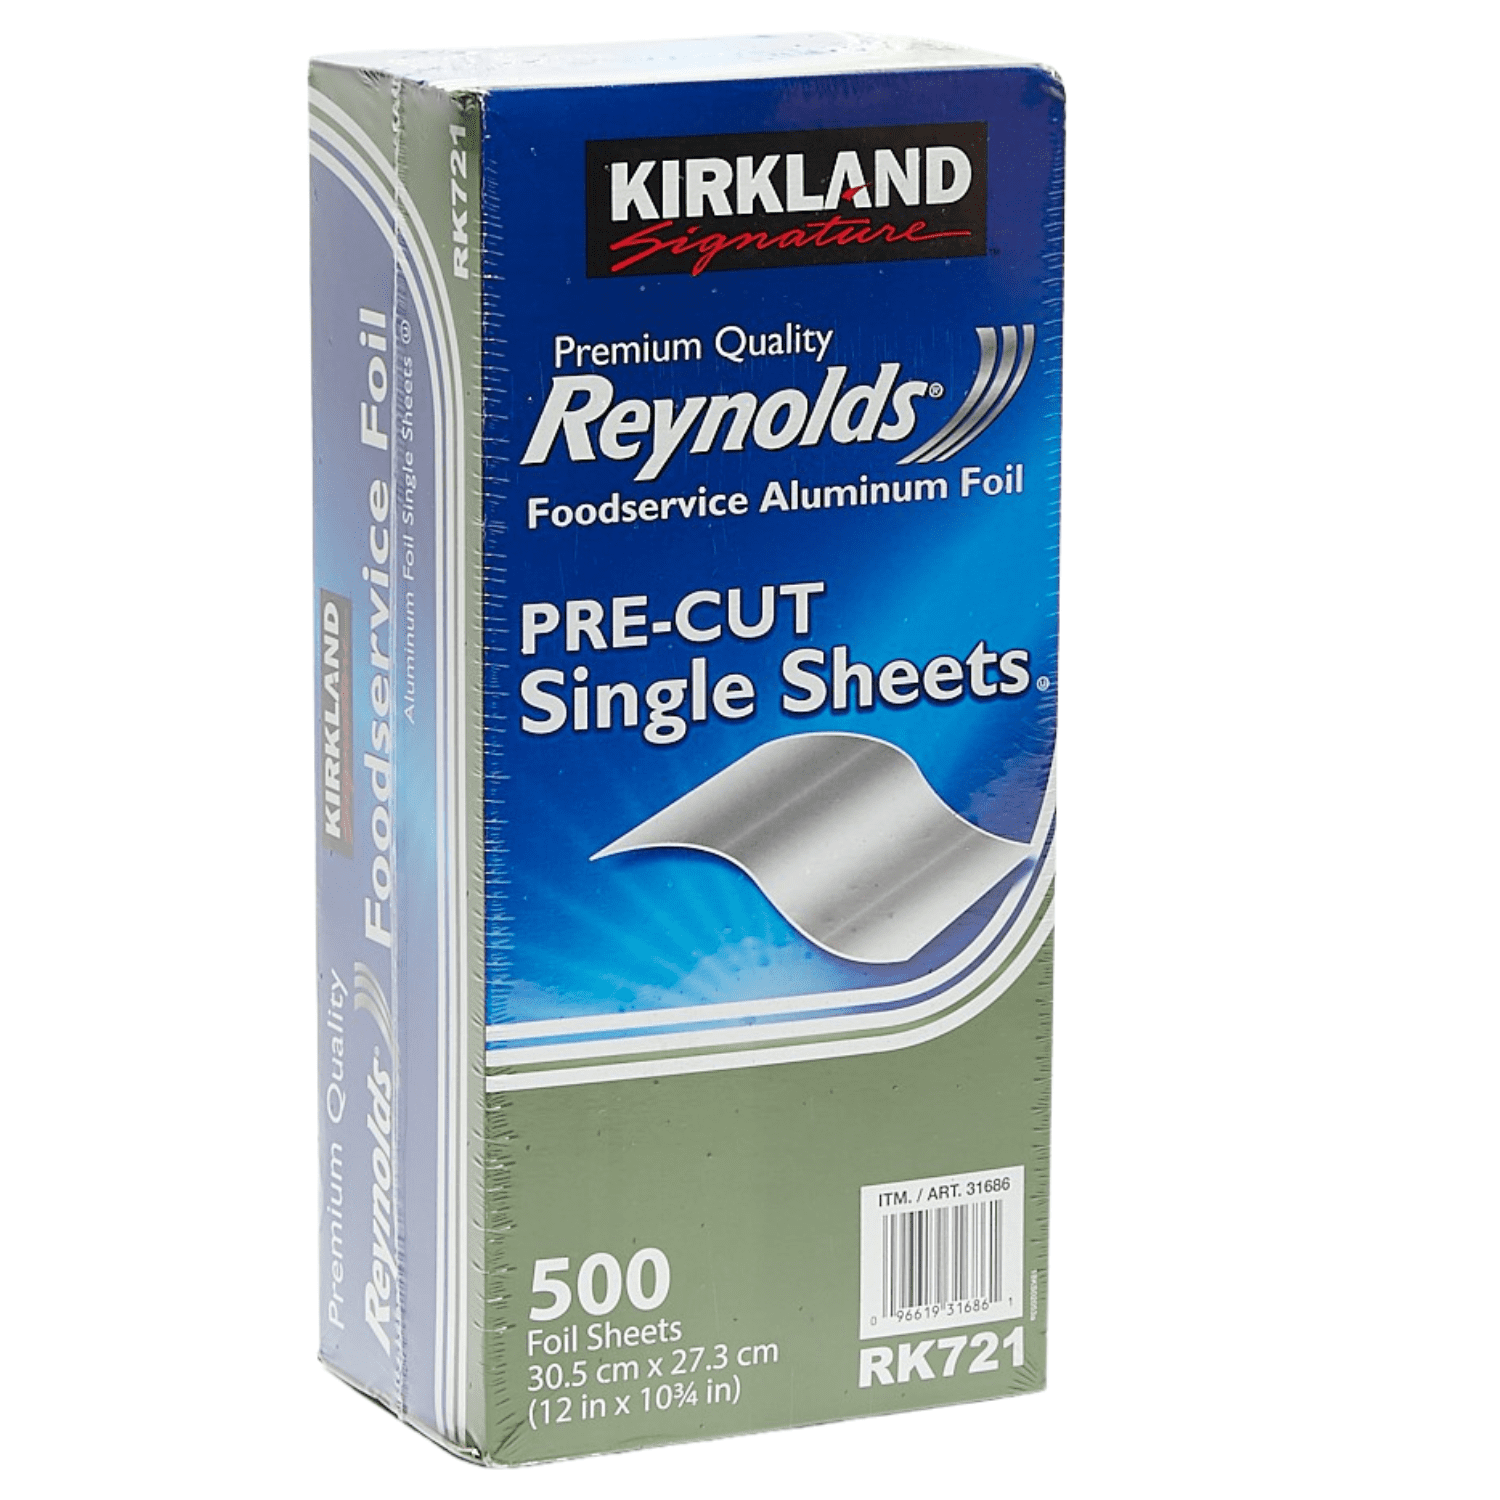 KS Reynolds Pre-Cut Single Sheet Premium Aluminum Foil Easy to Use